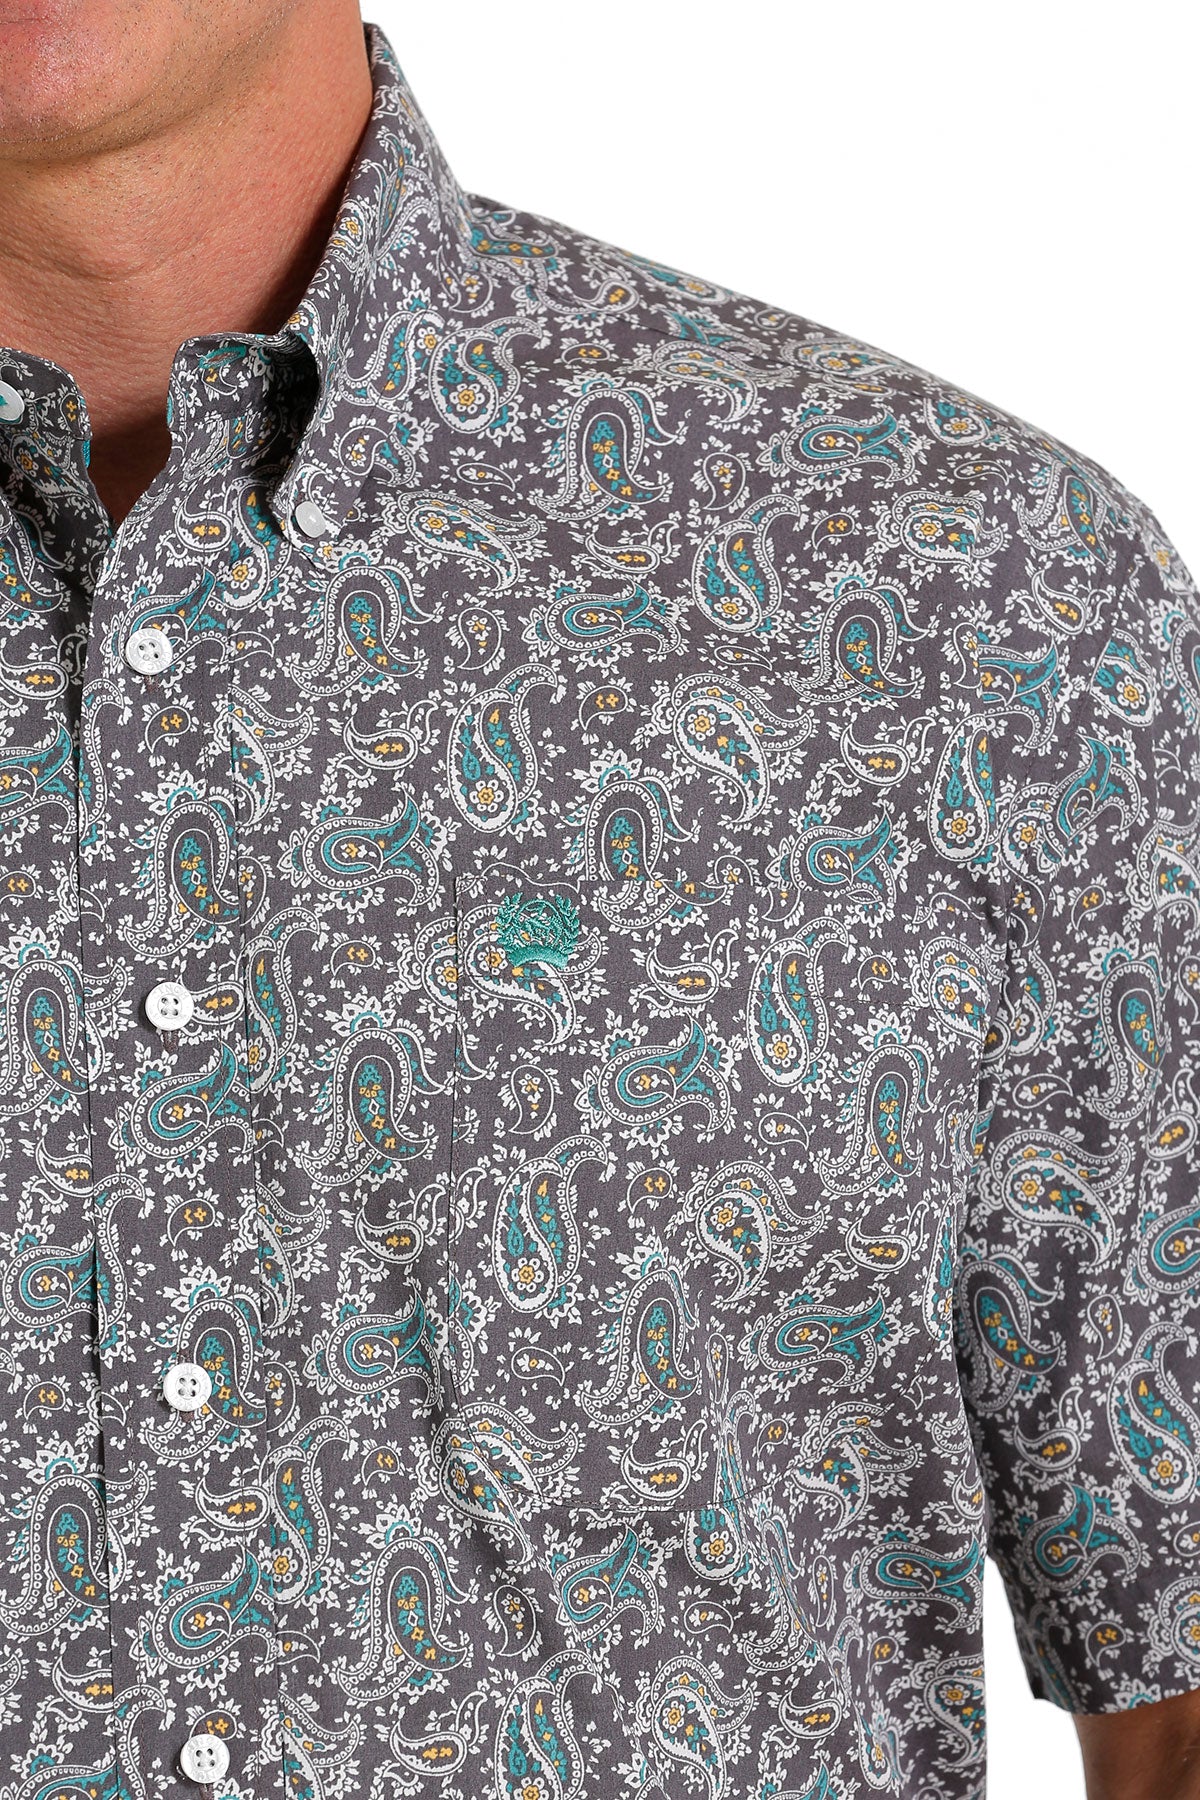 Men's Cinch Paisley Grey/Turquoise Button Down Shirt